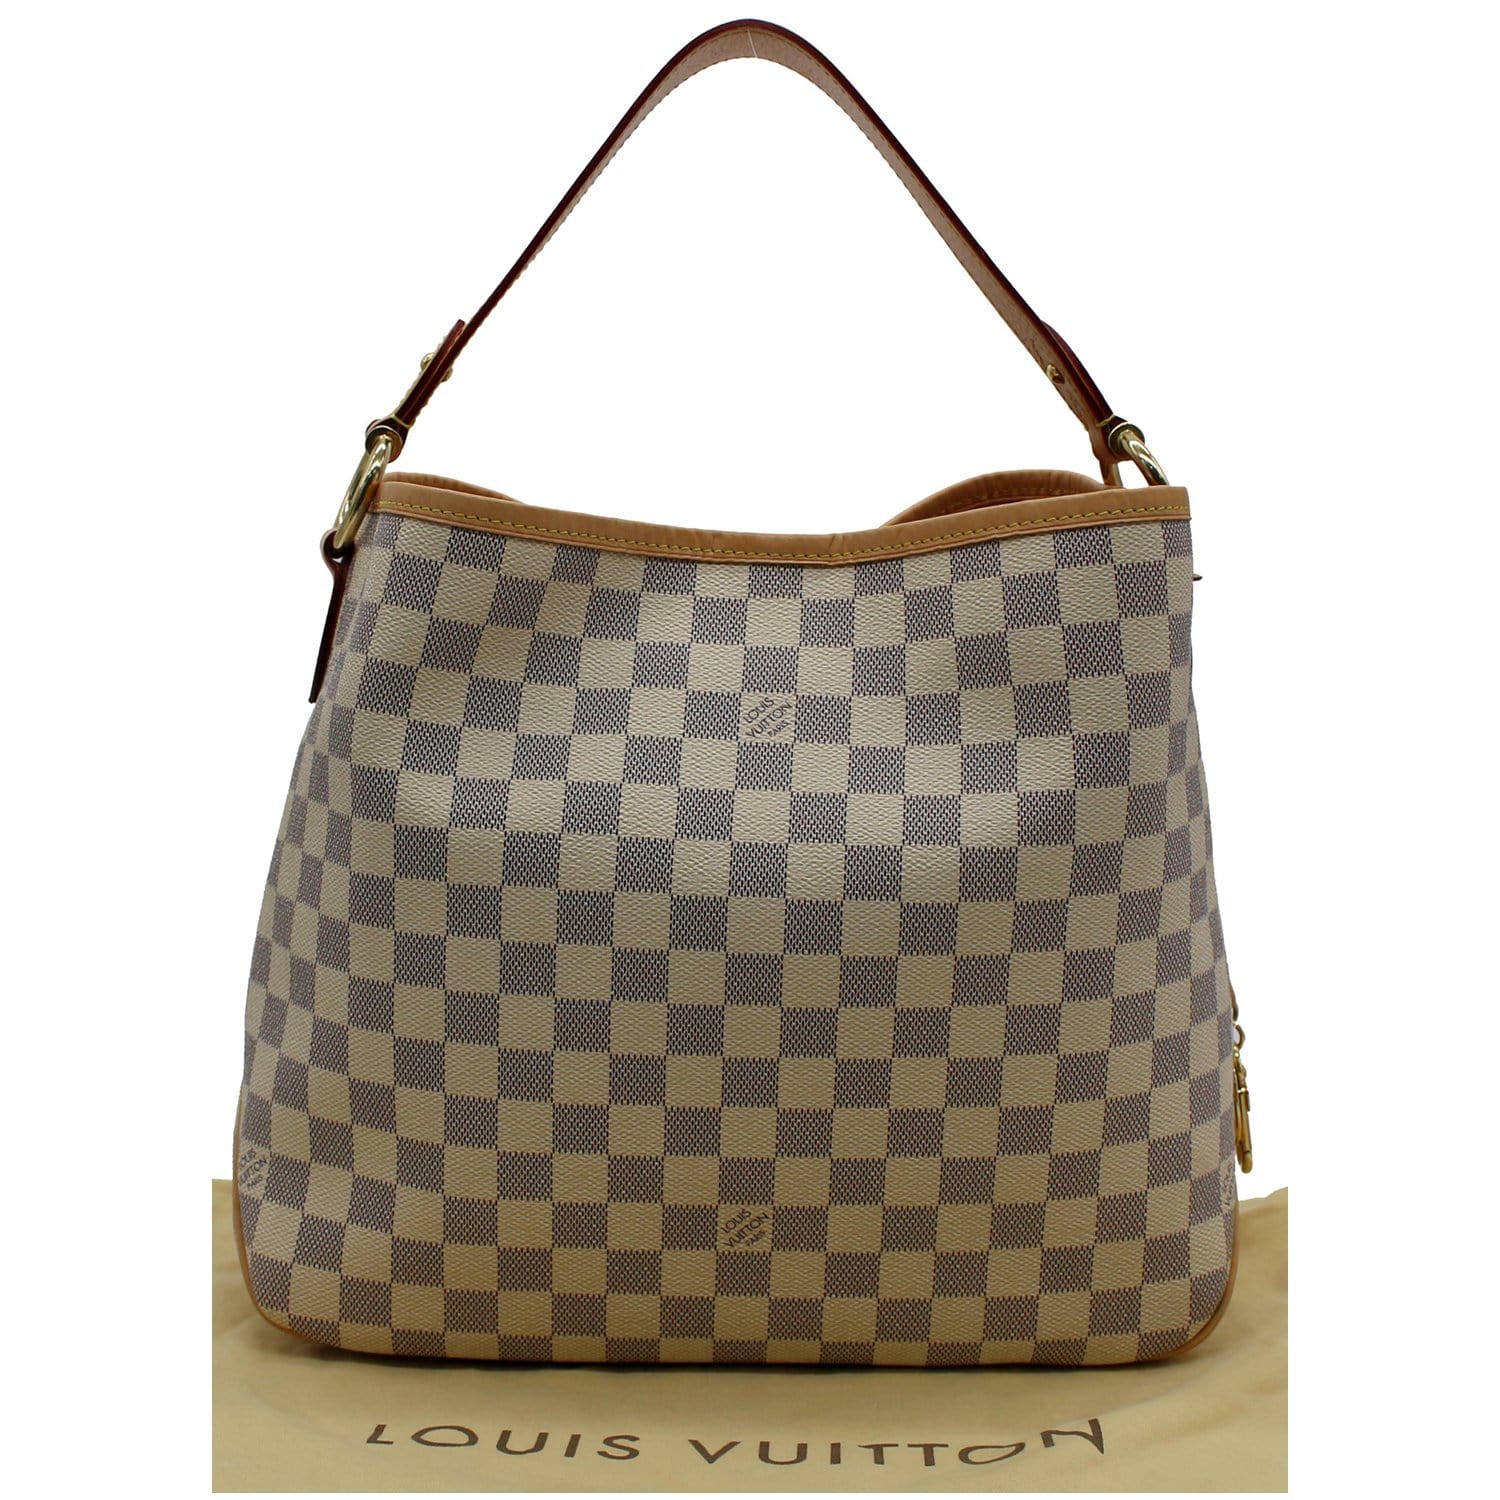 USED Louis Vuitton Damier Azur Delightful PM Hobo Shoulder Bag AUTHENTIC